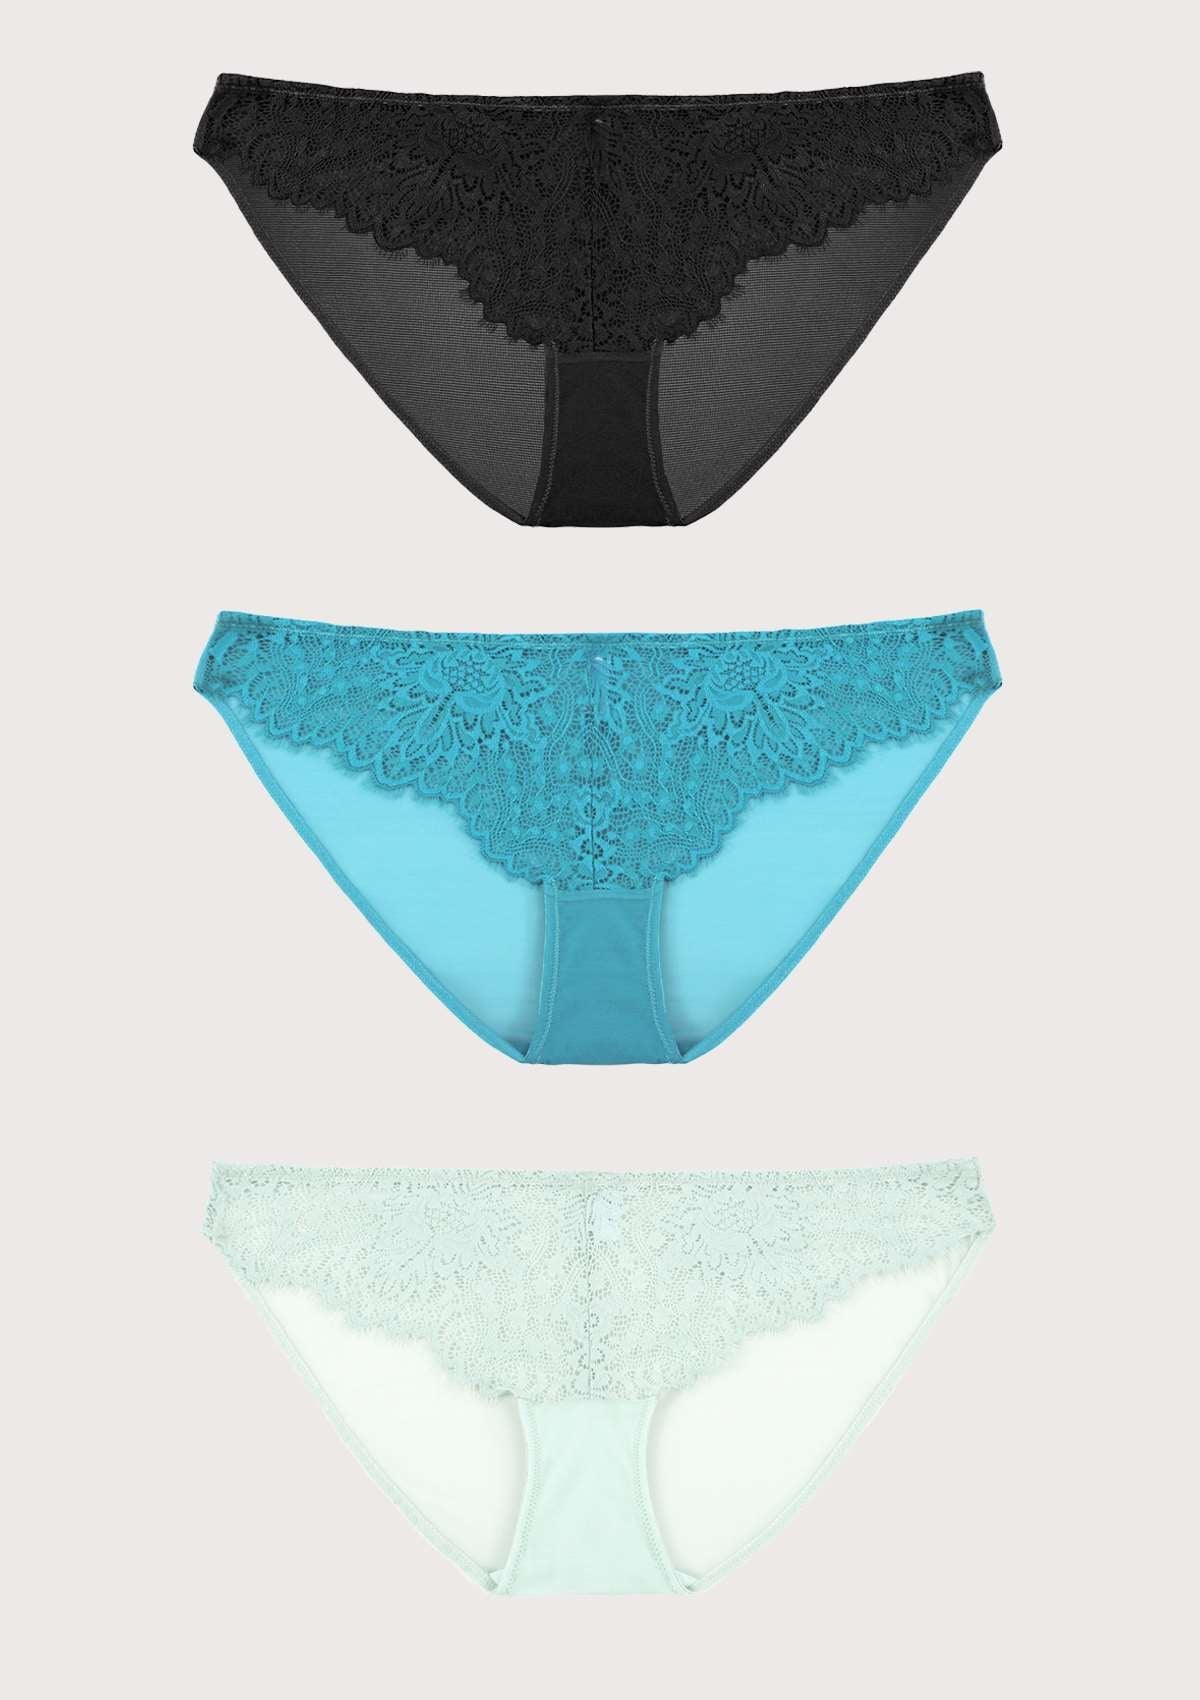 HSIA Sunflower Exquisite Lighweight Soft Lace Bikini Panties 3 Pack - L / Black+Horizon Blue+Pink